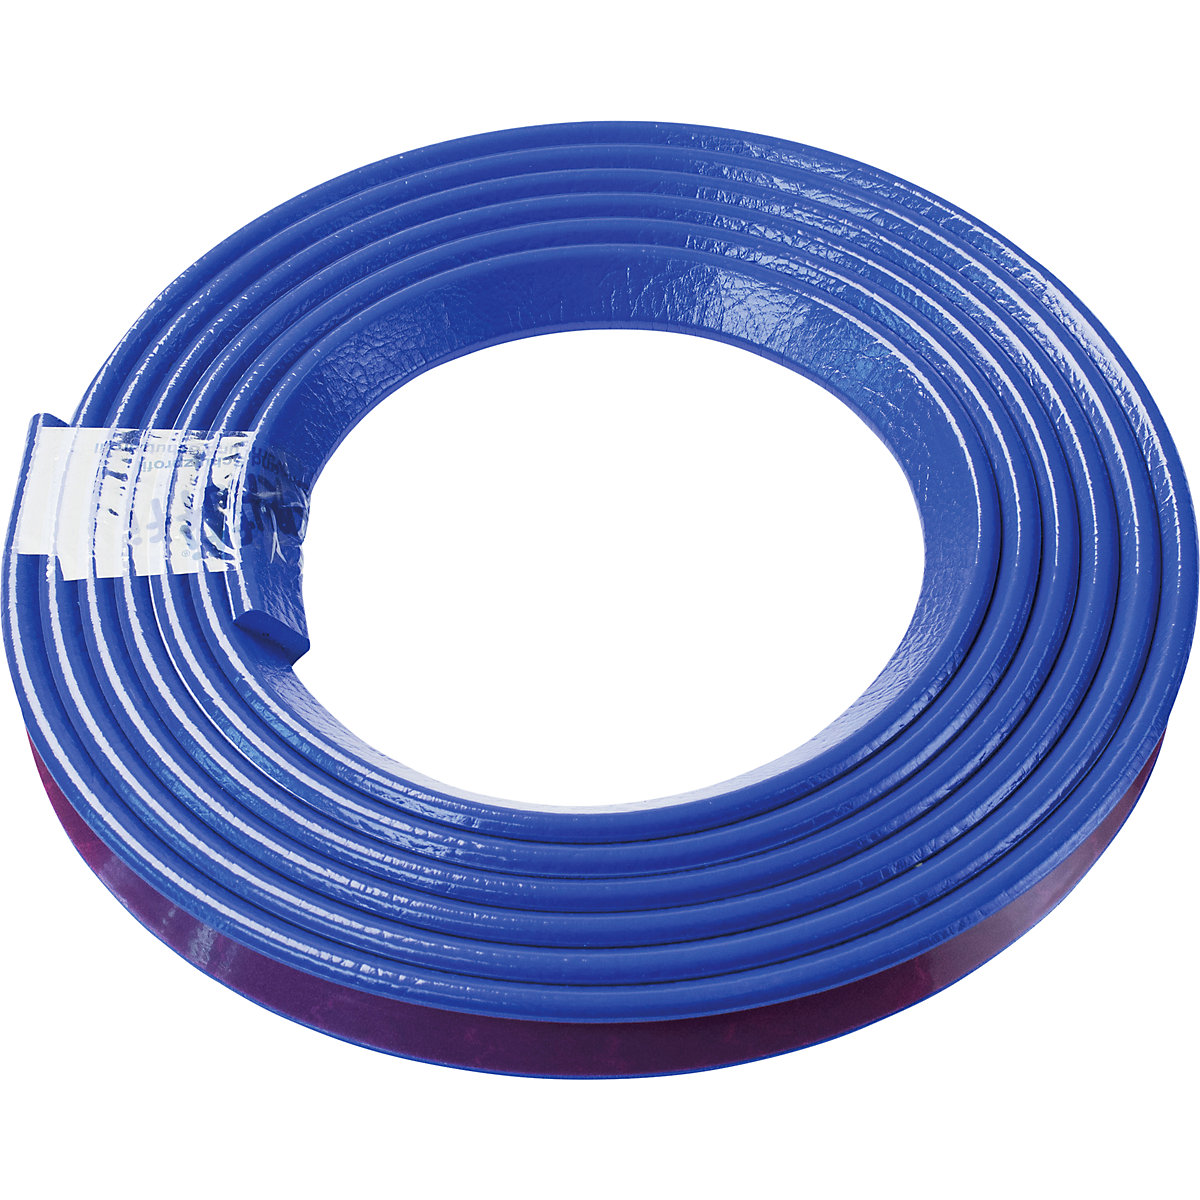 Knuffi®-hoekbescherming – SHG, type E, 1 rol à 5 m, blauw-23